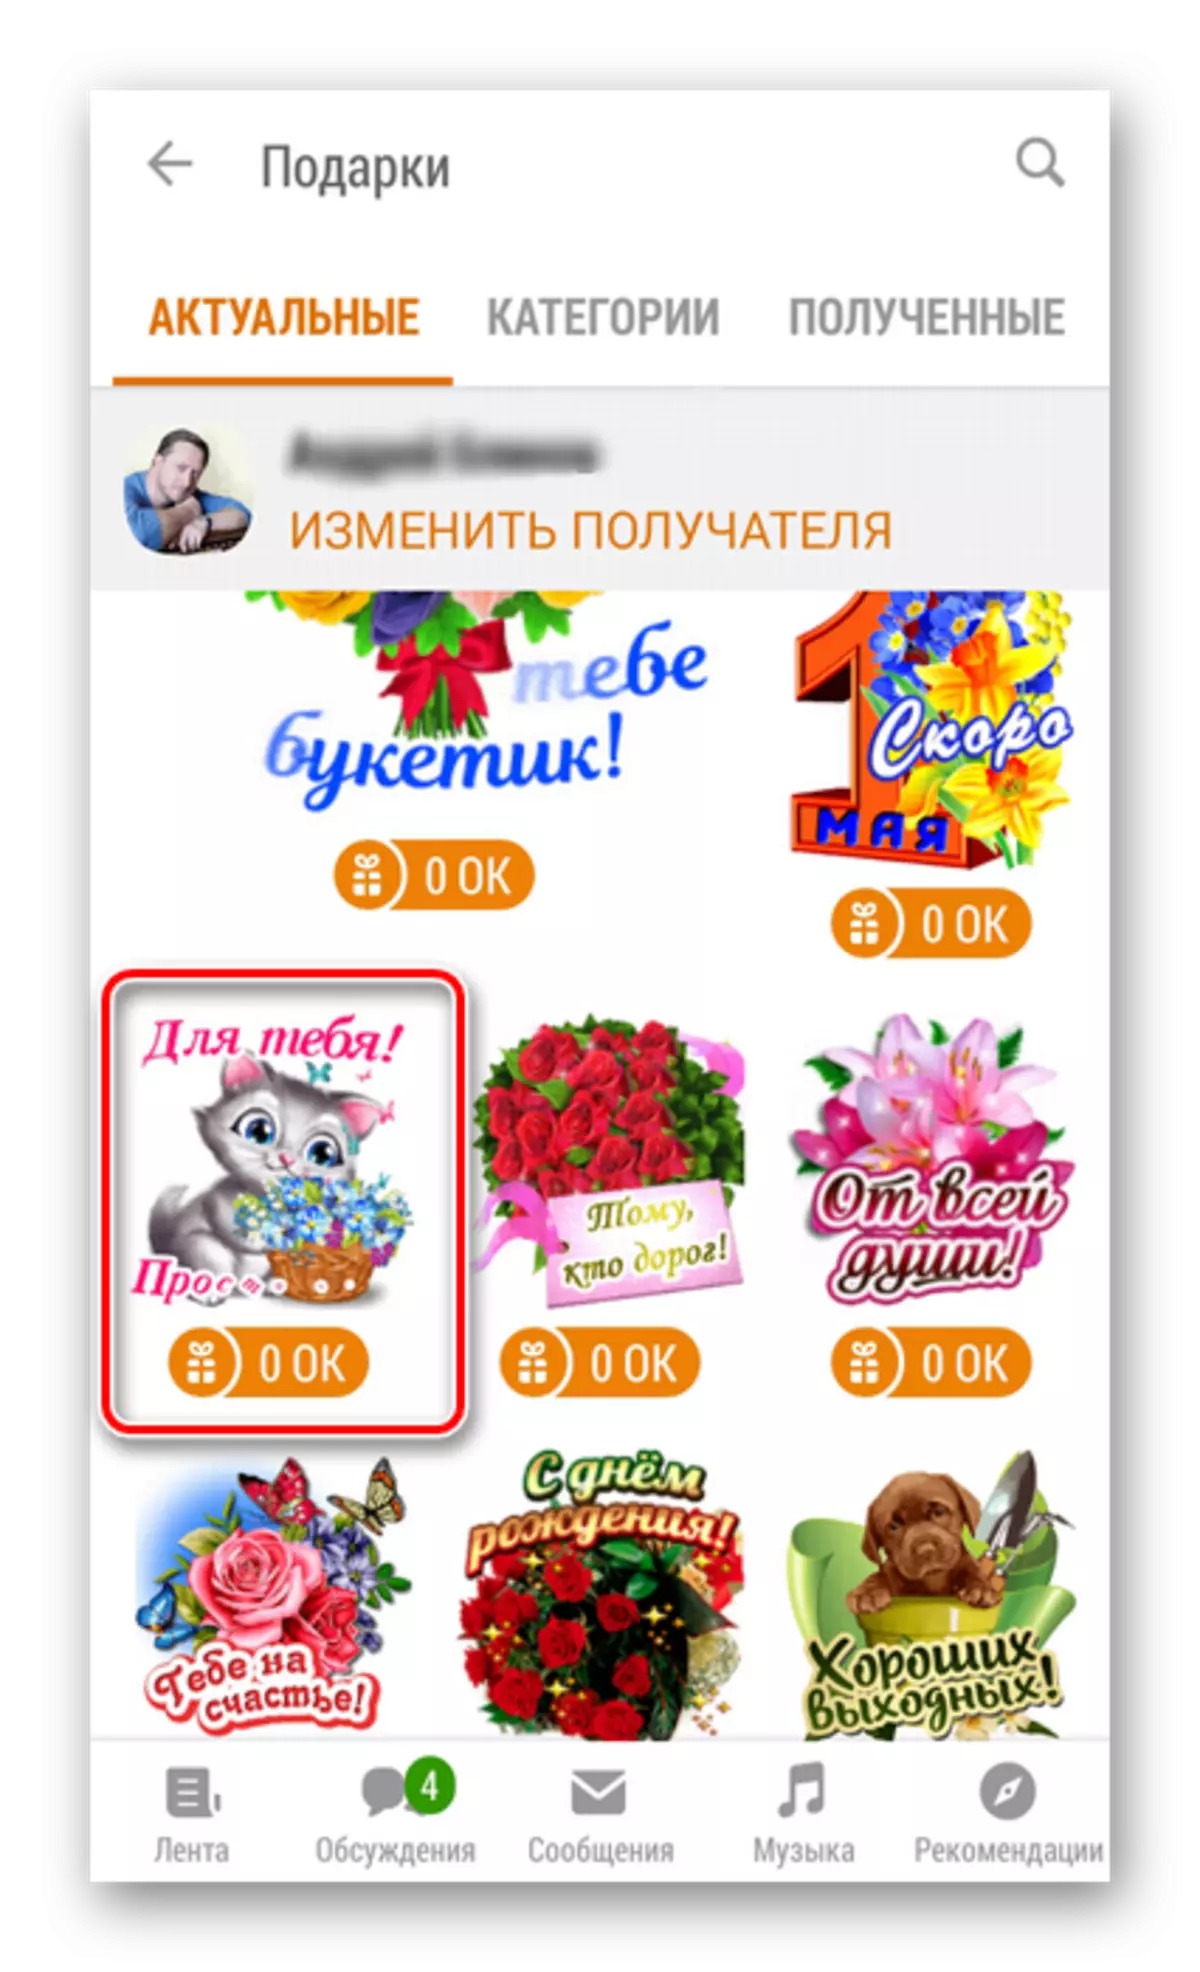 Geschenken in apps Odnoklassniki